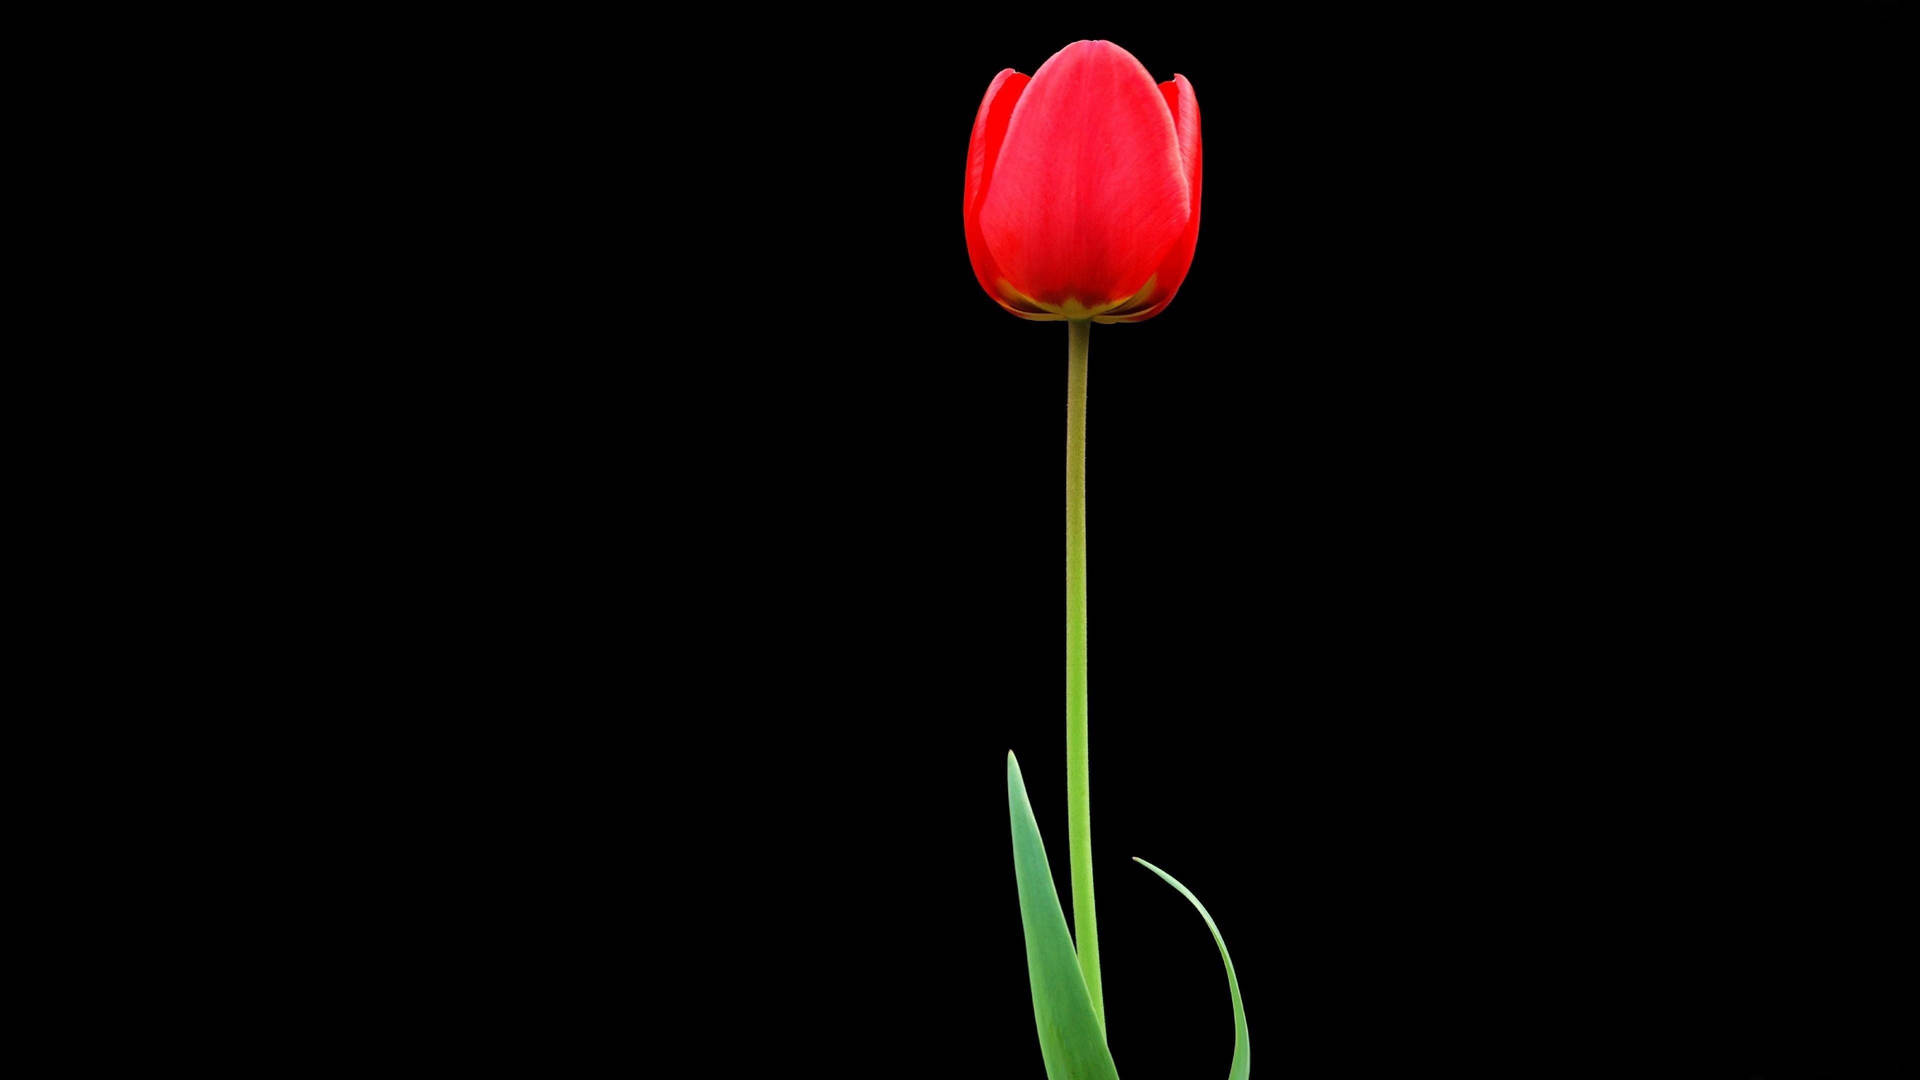 Garden Tulip On Black Tablet Background